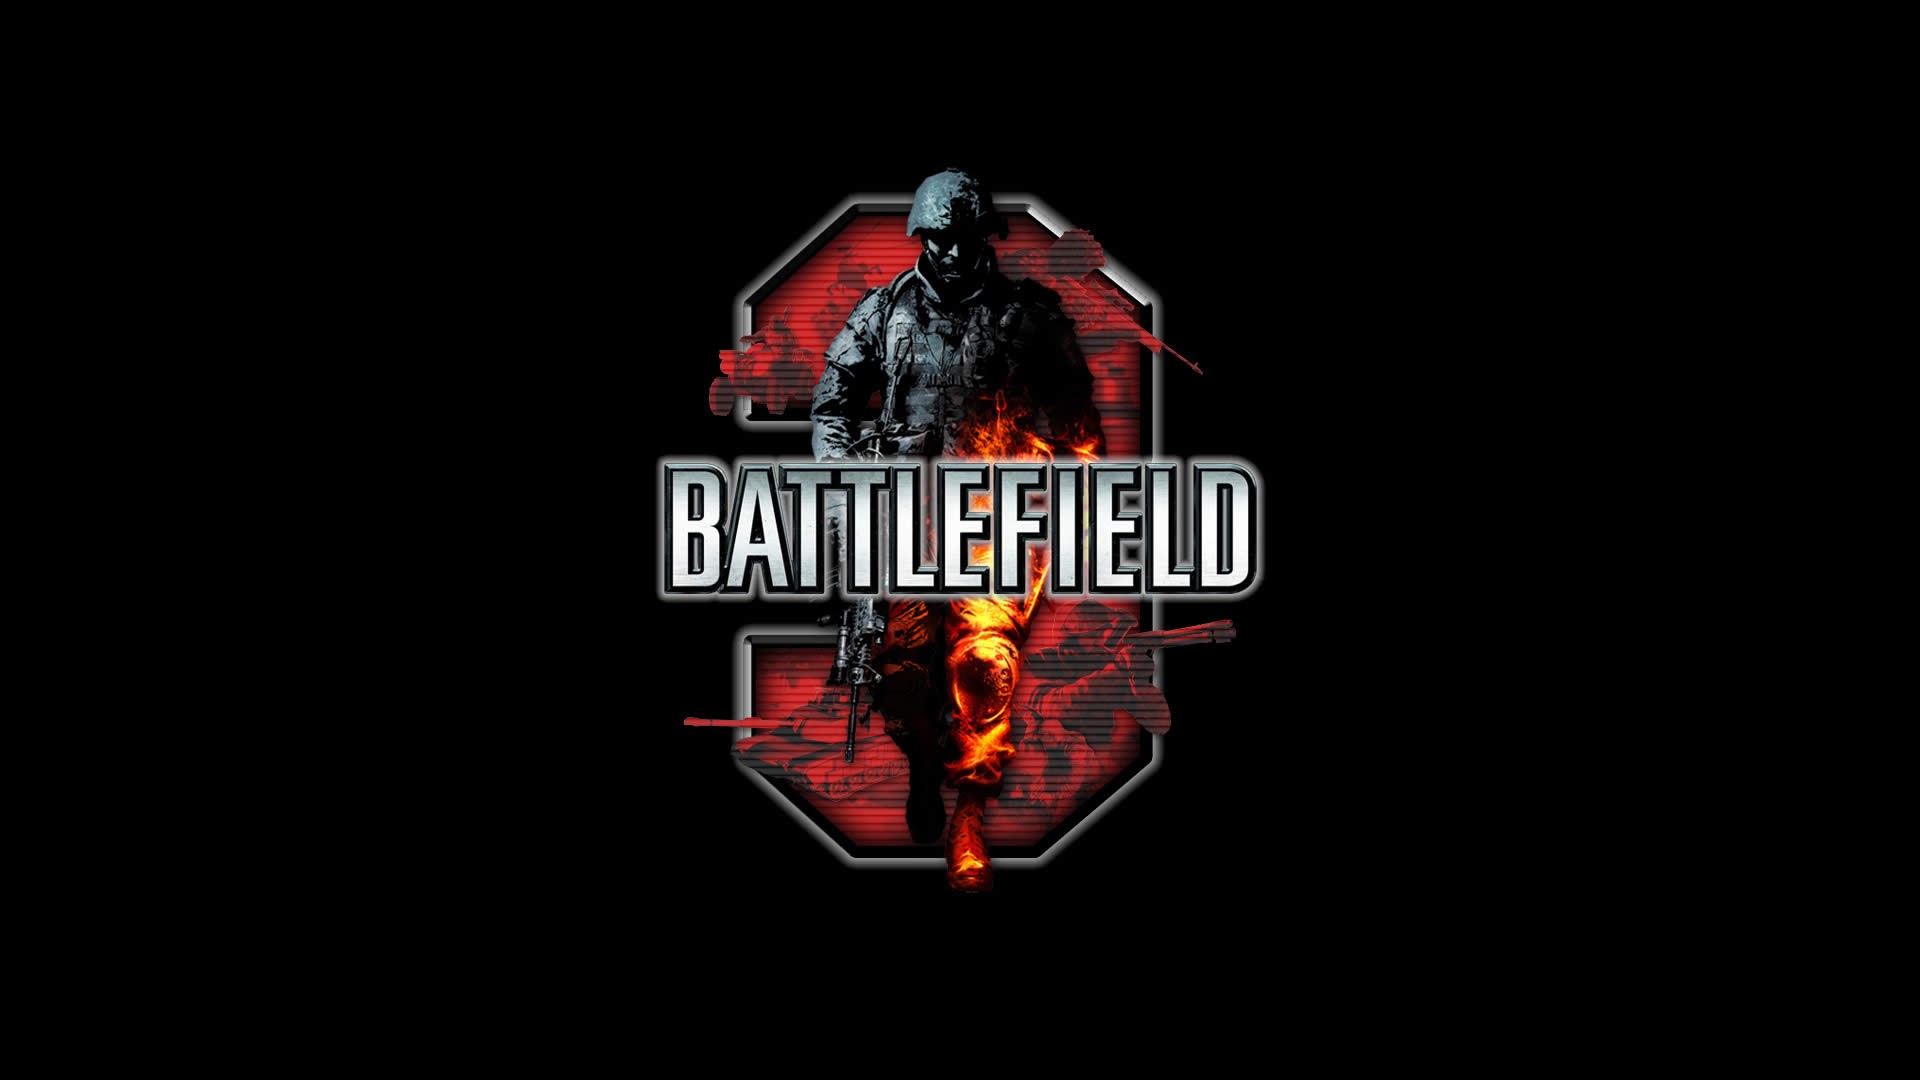 Battlefield 3, Video Games, Black Wallpaper